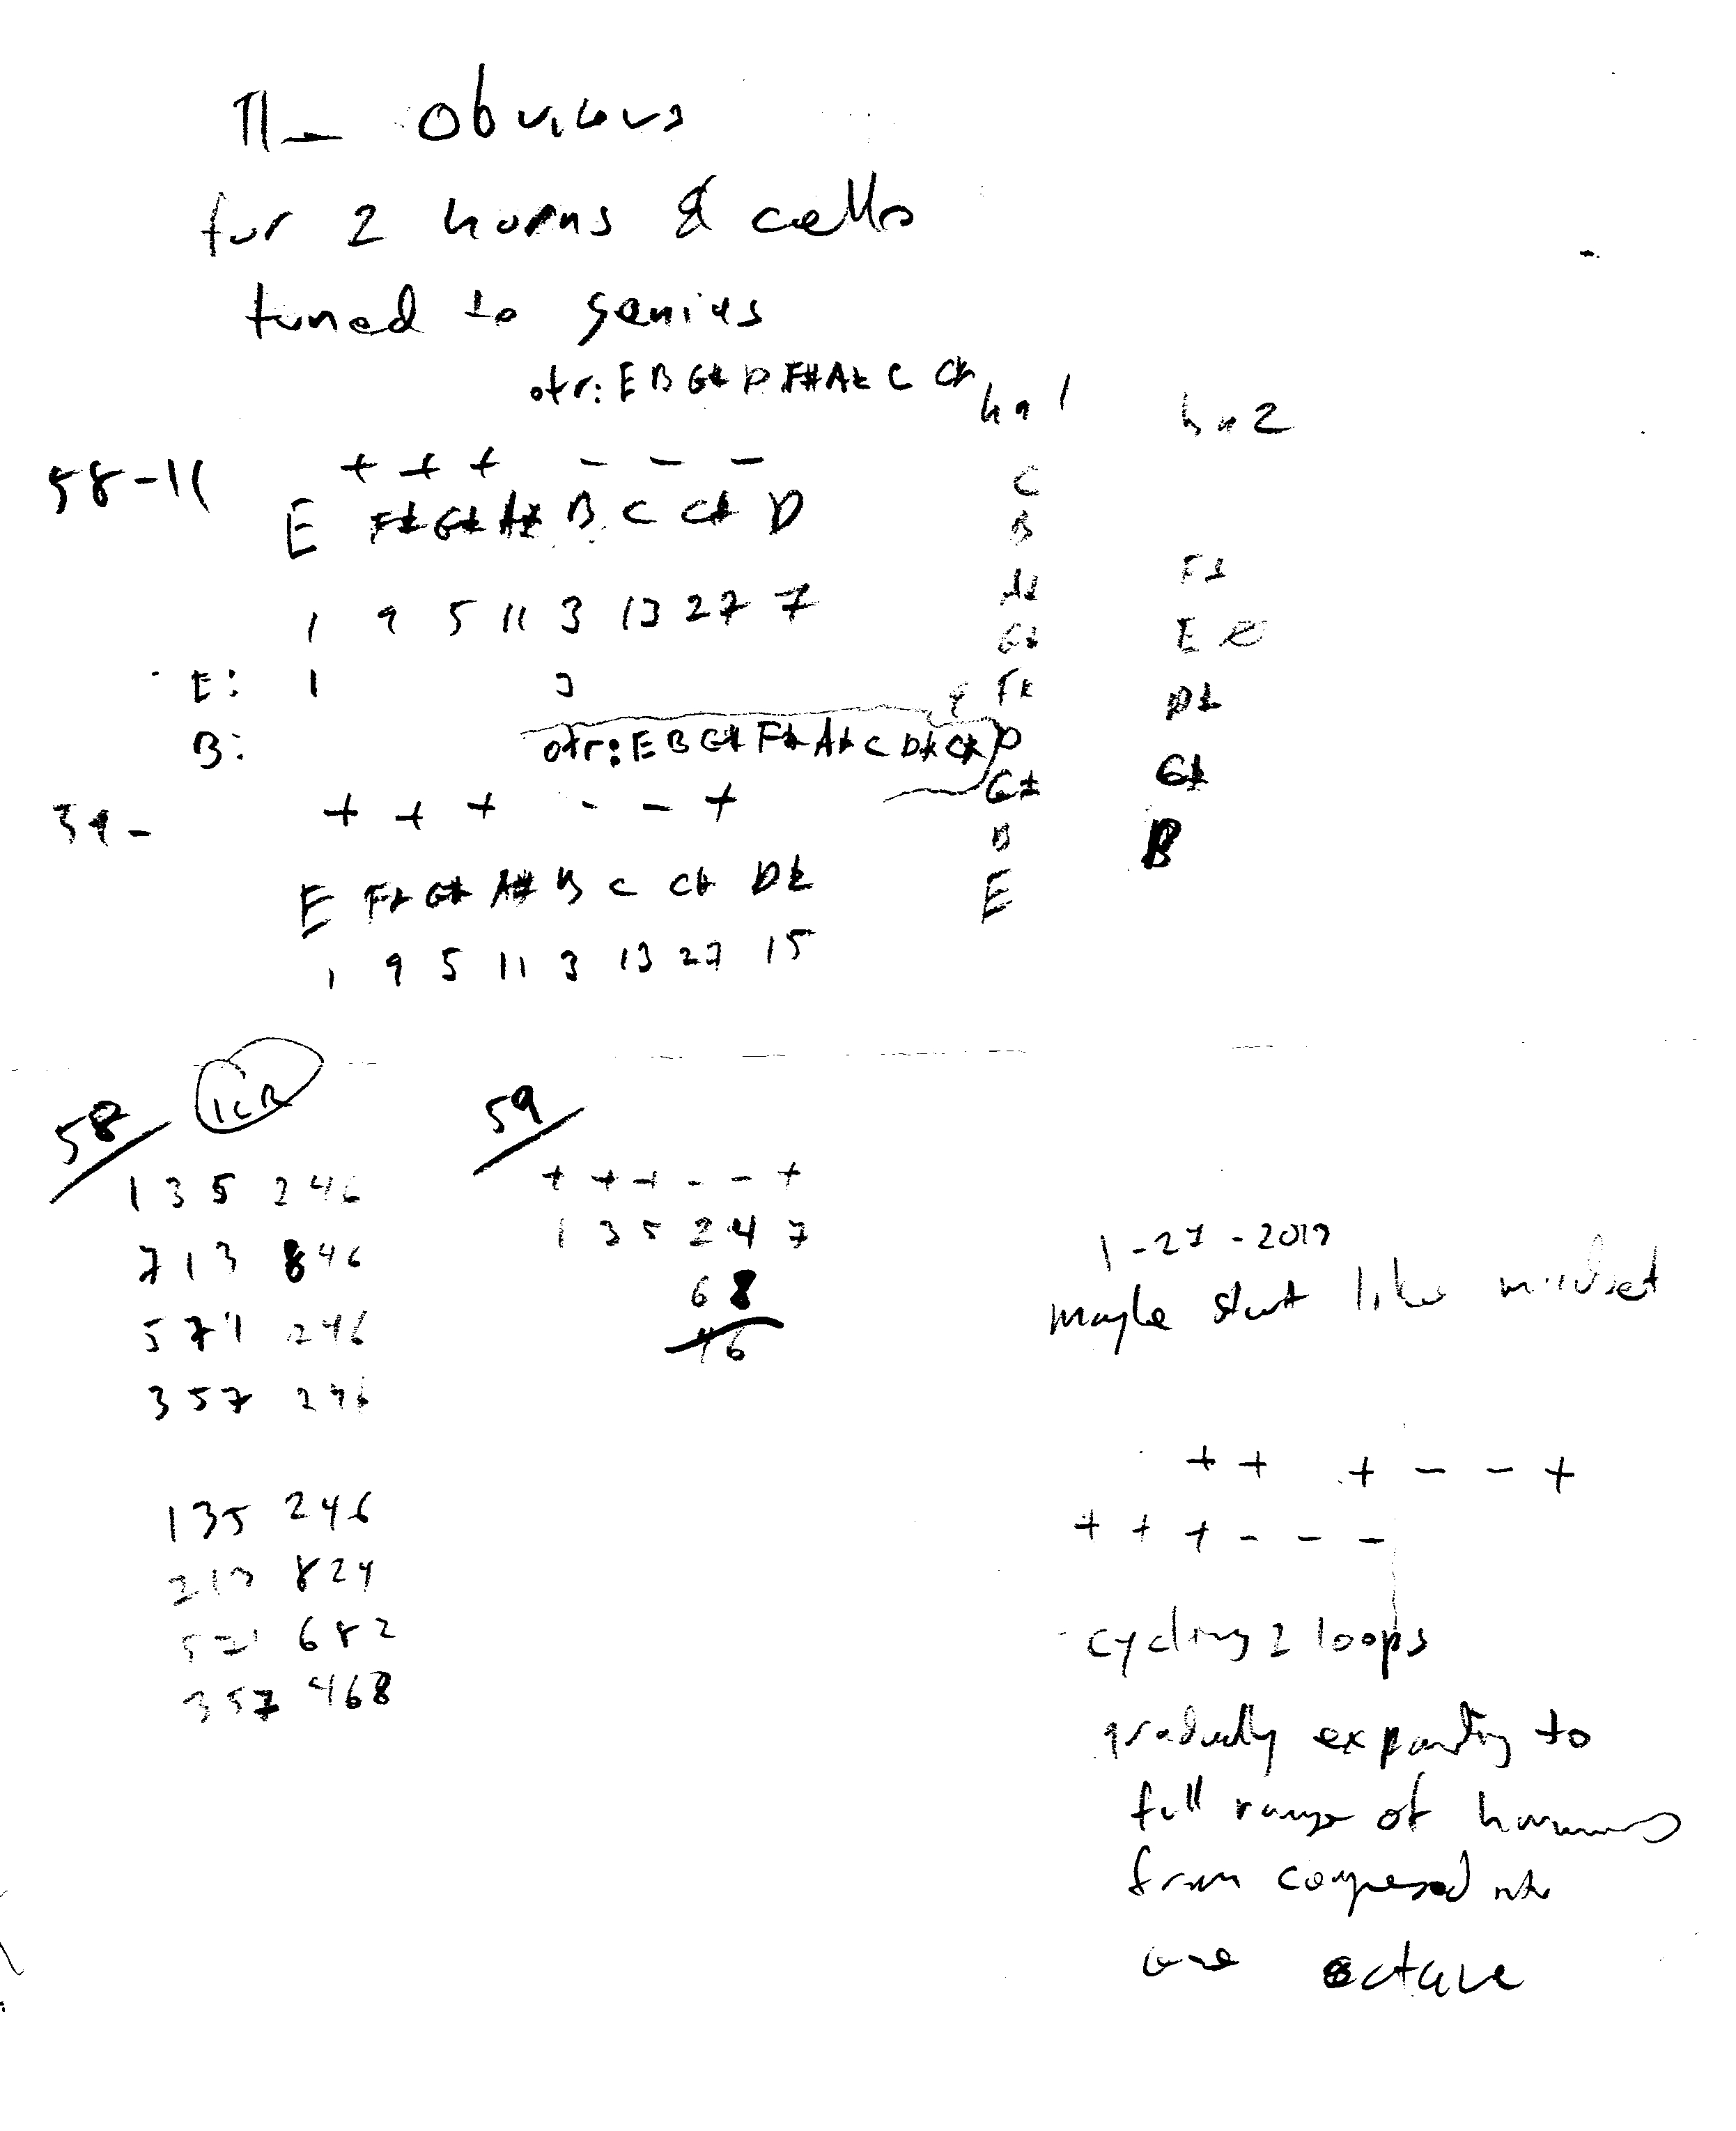 Richard Burdick's notes for opus 236